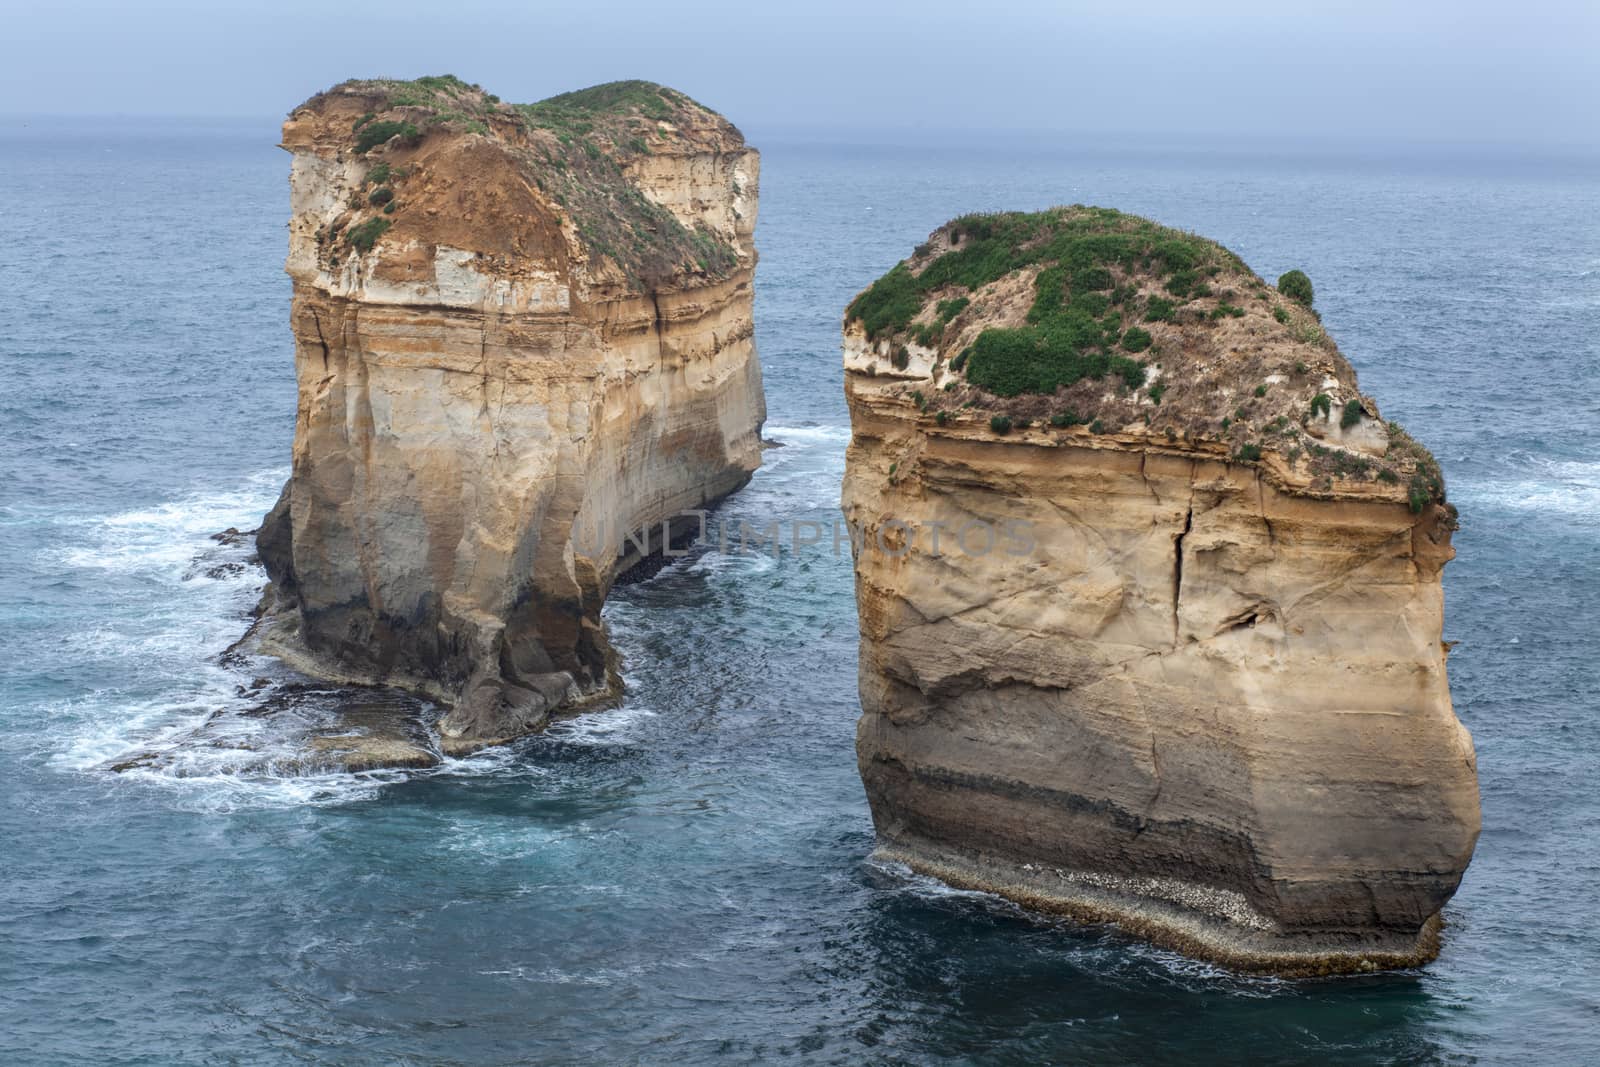 Twelve Apostles and orange cliffs along the Great Ocean Road in Australia - Image